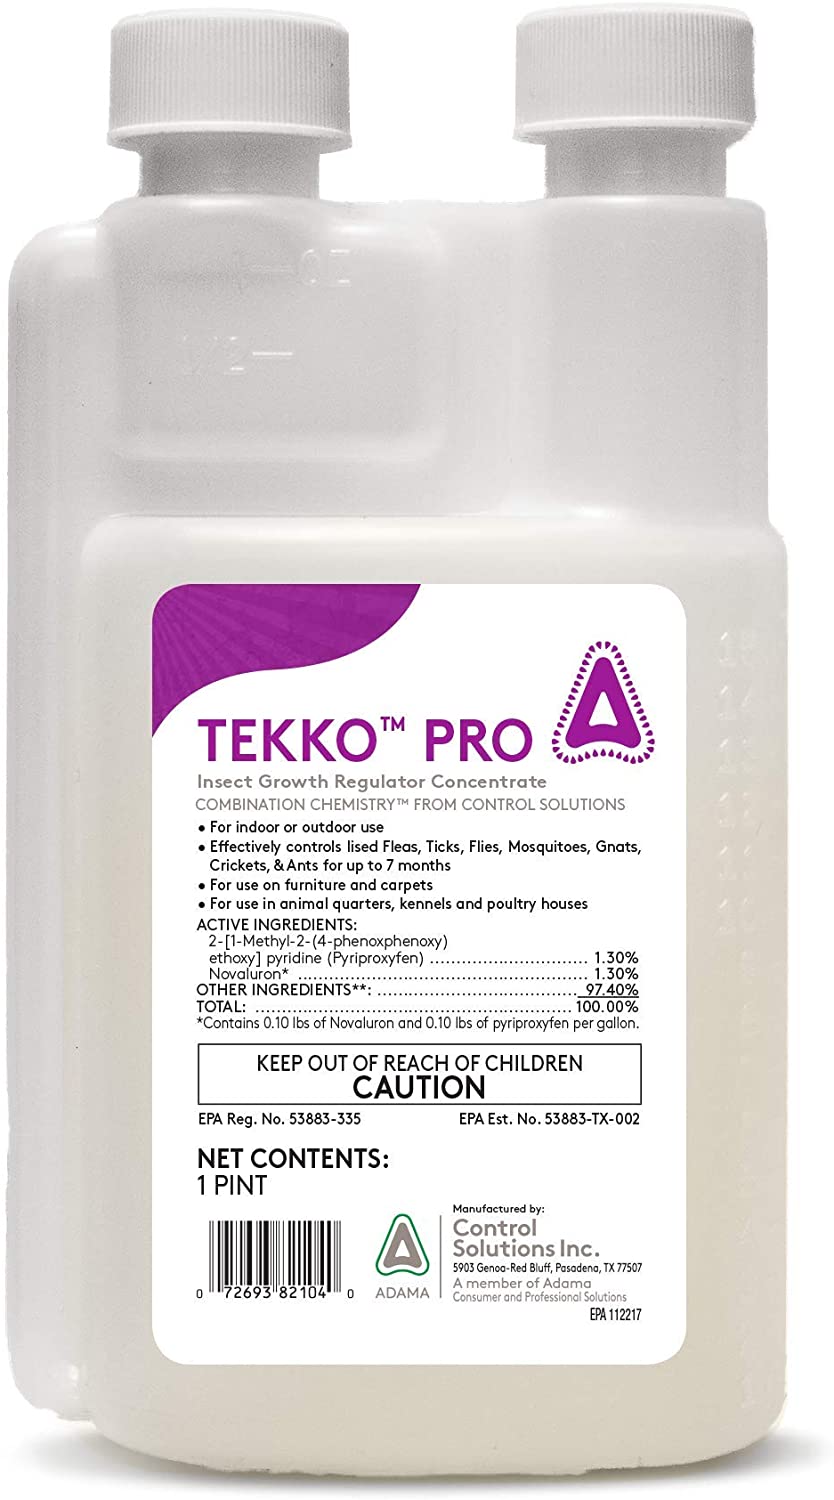 CSI Tekko Pro IGR Insect Growth Regulator